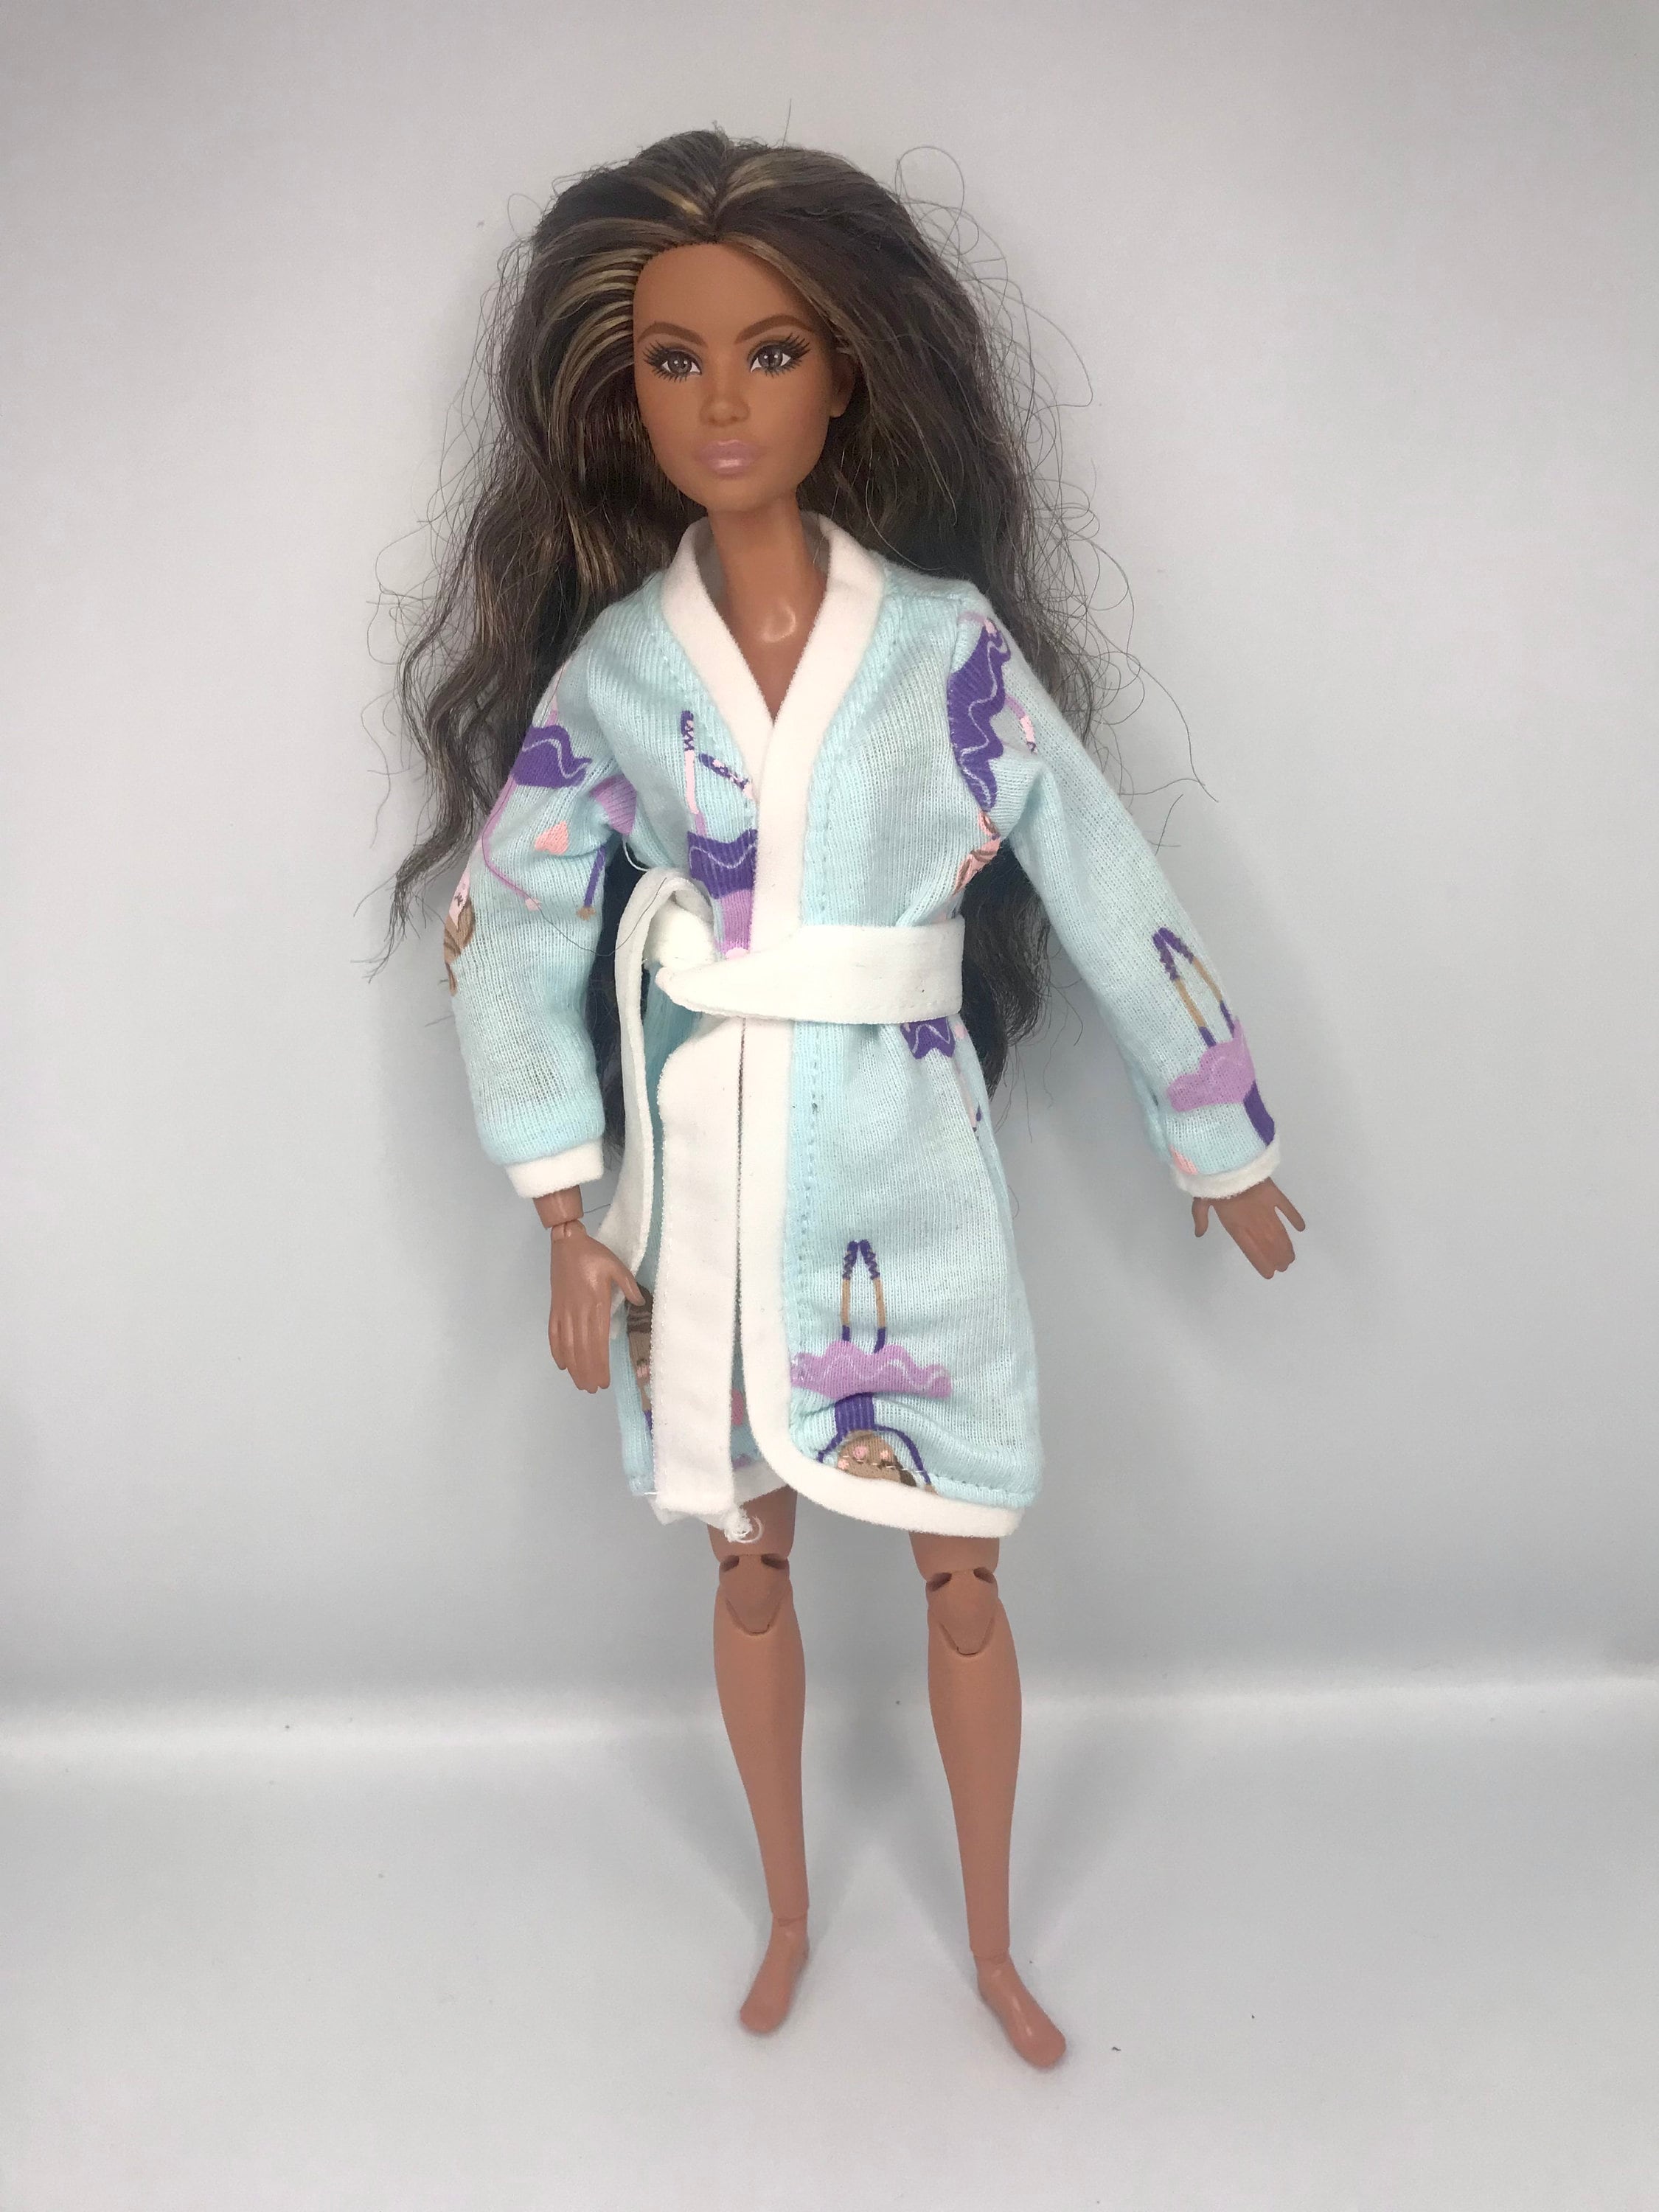 Barbie(バービー) Fashion Doll Pen Gift Set (ギフトセット) 2001